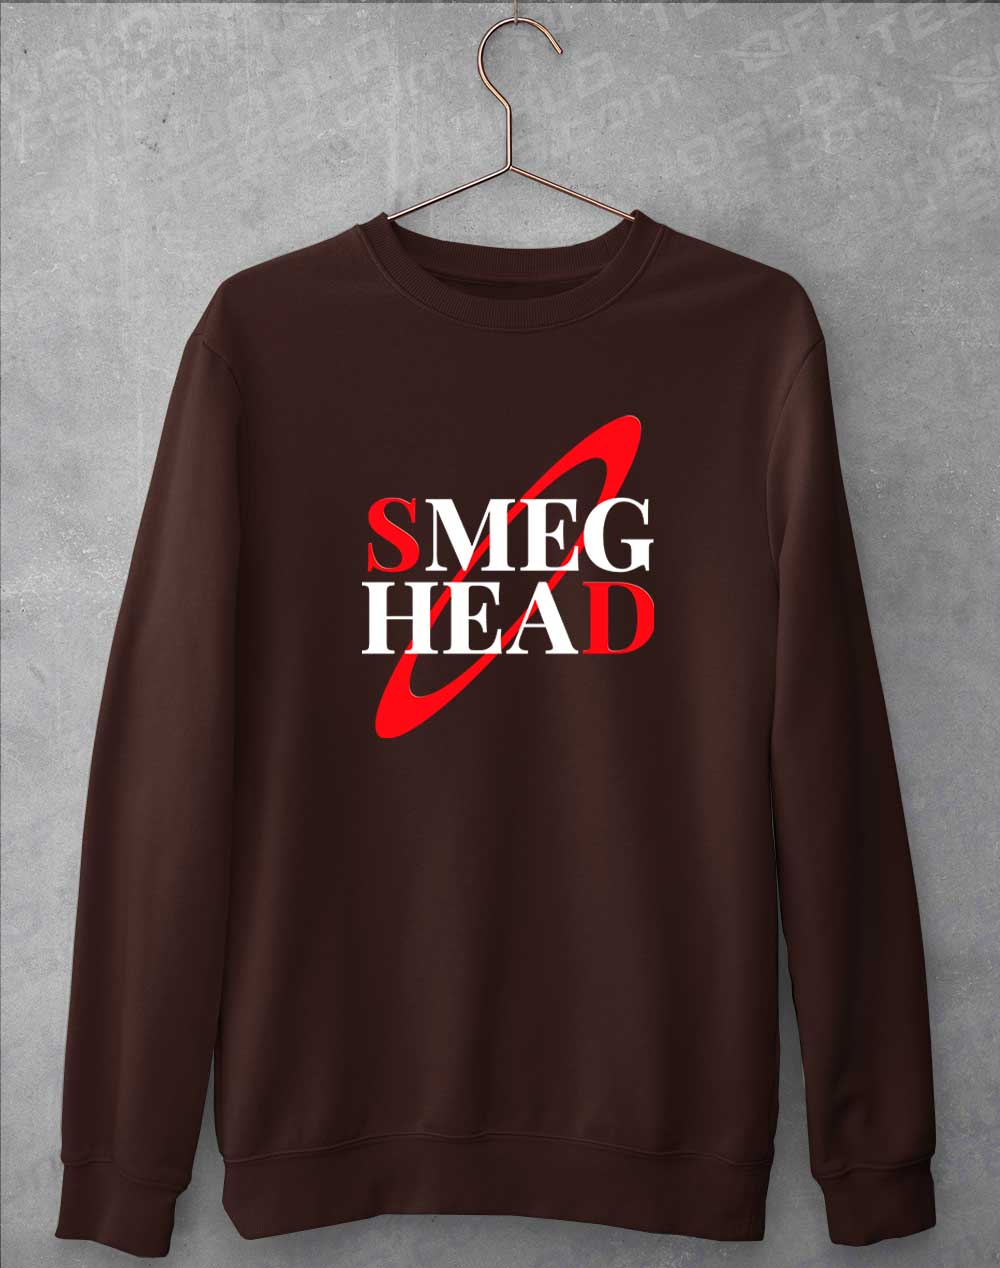 Hot Chocolate - Smeg Head Sweatshirt